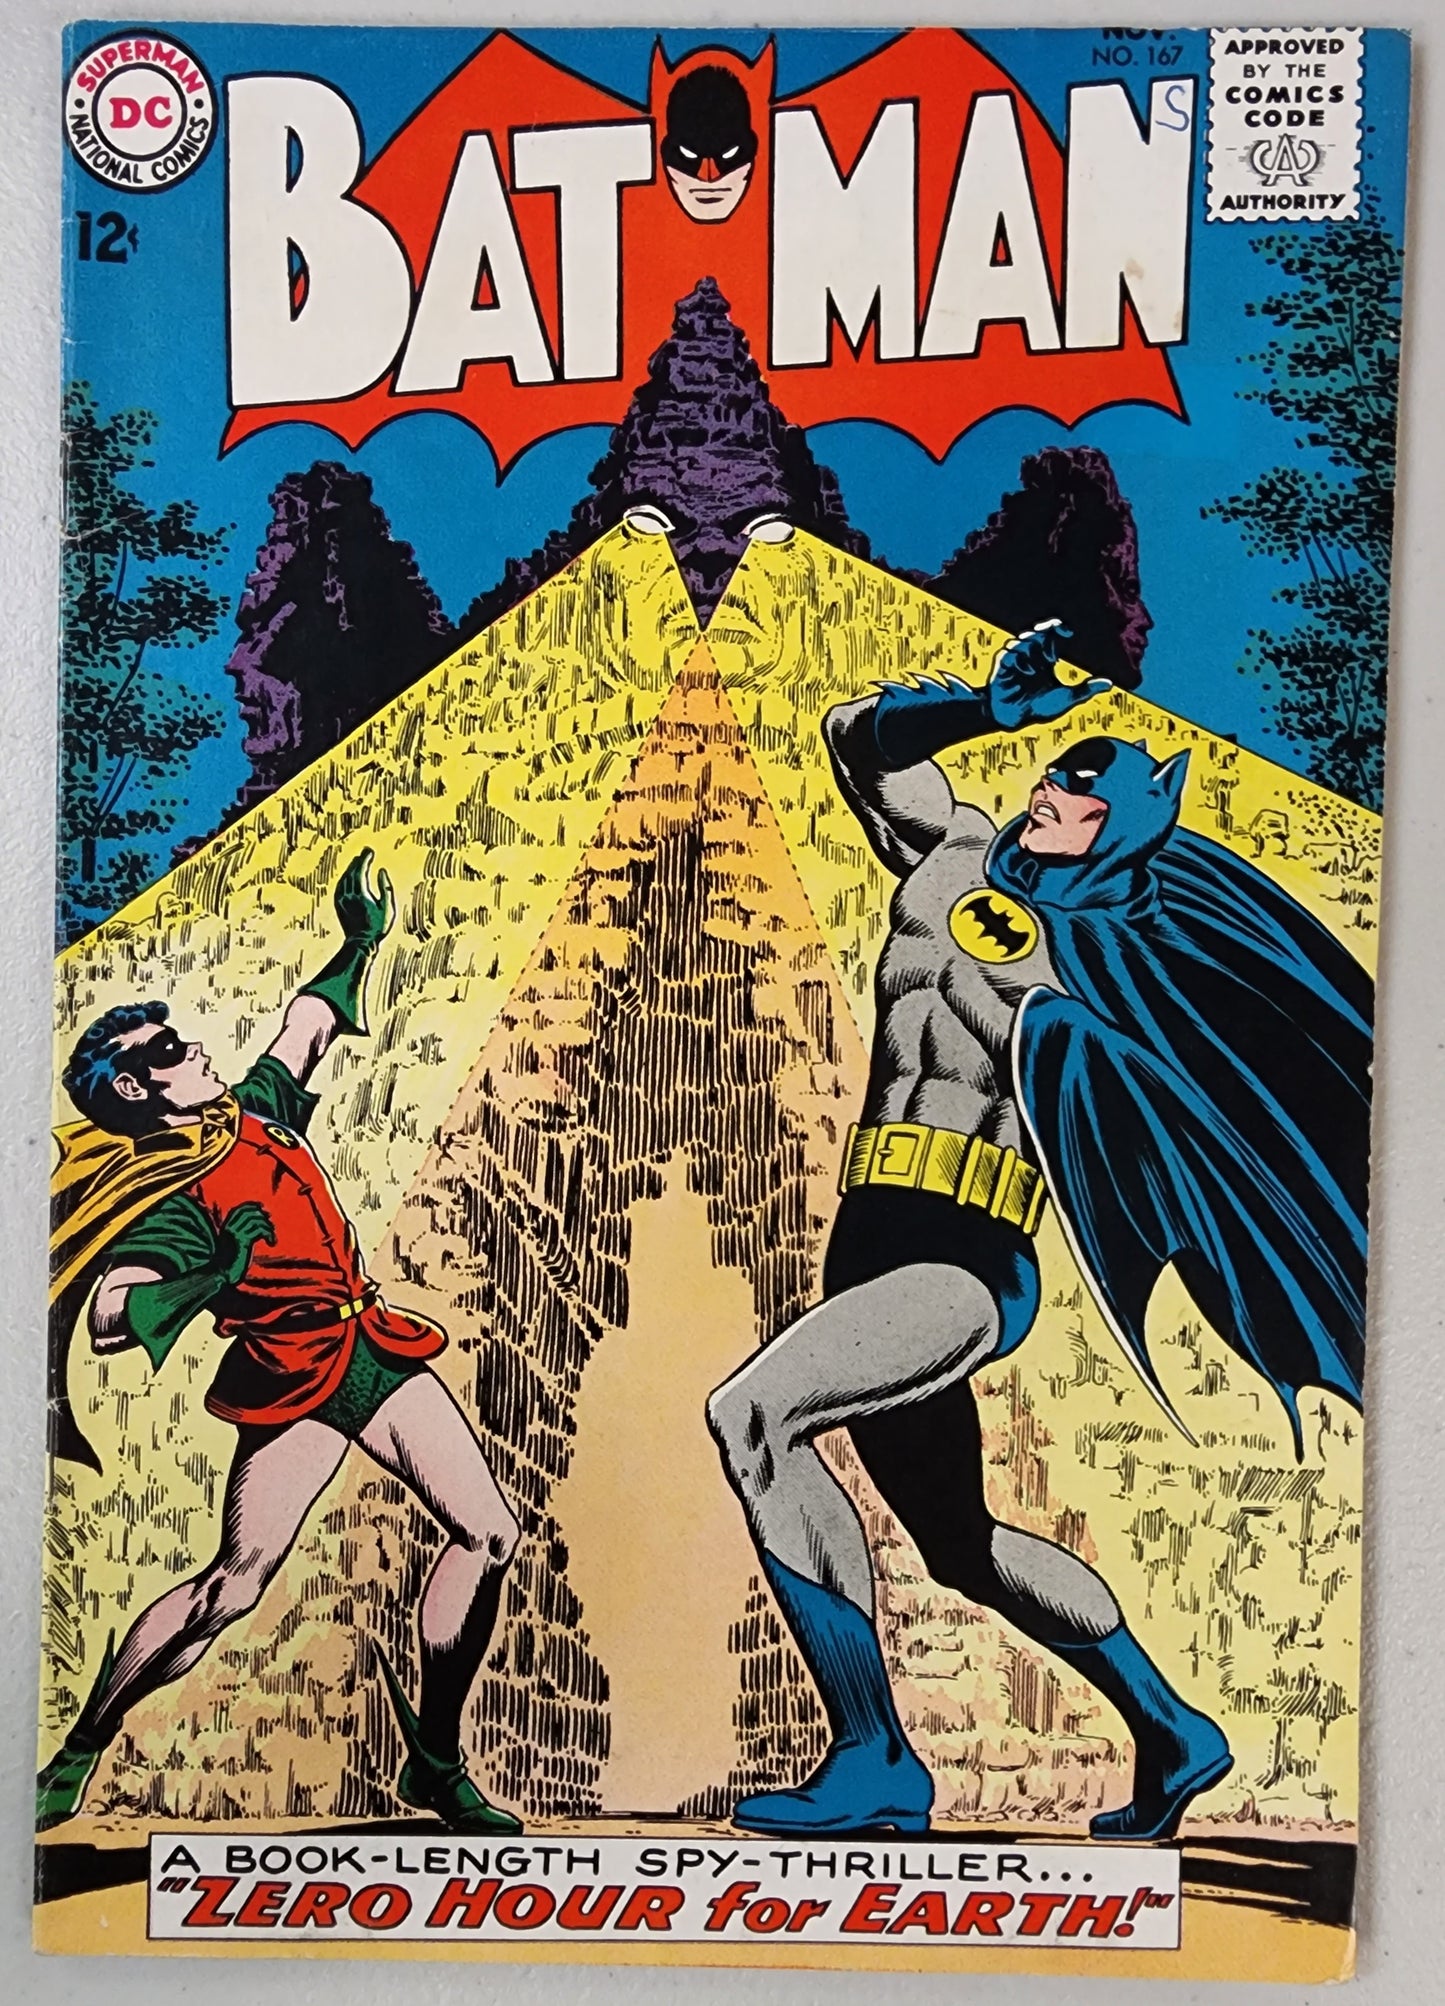 BATMAN #167 1967